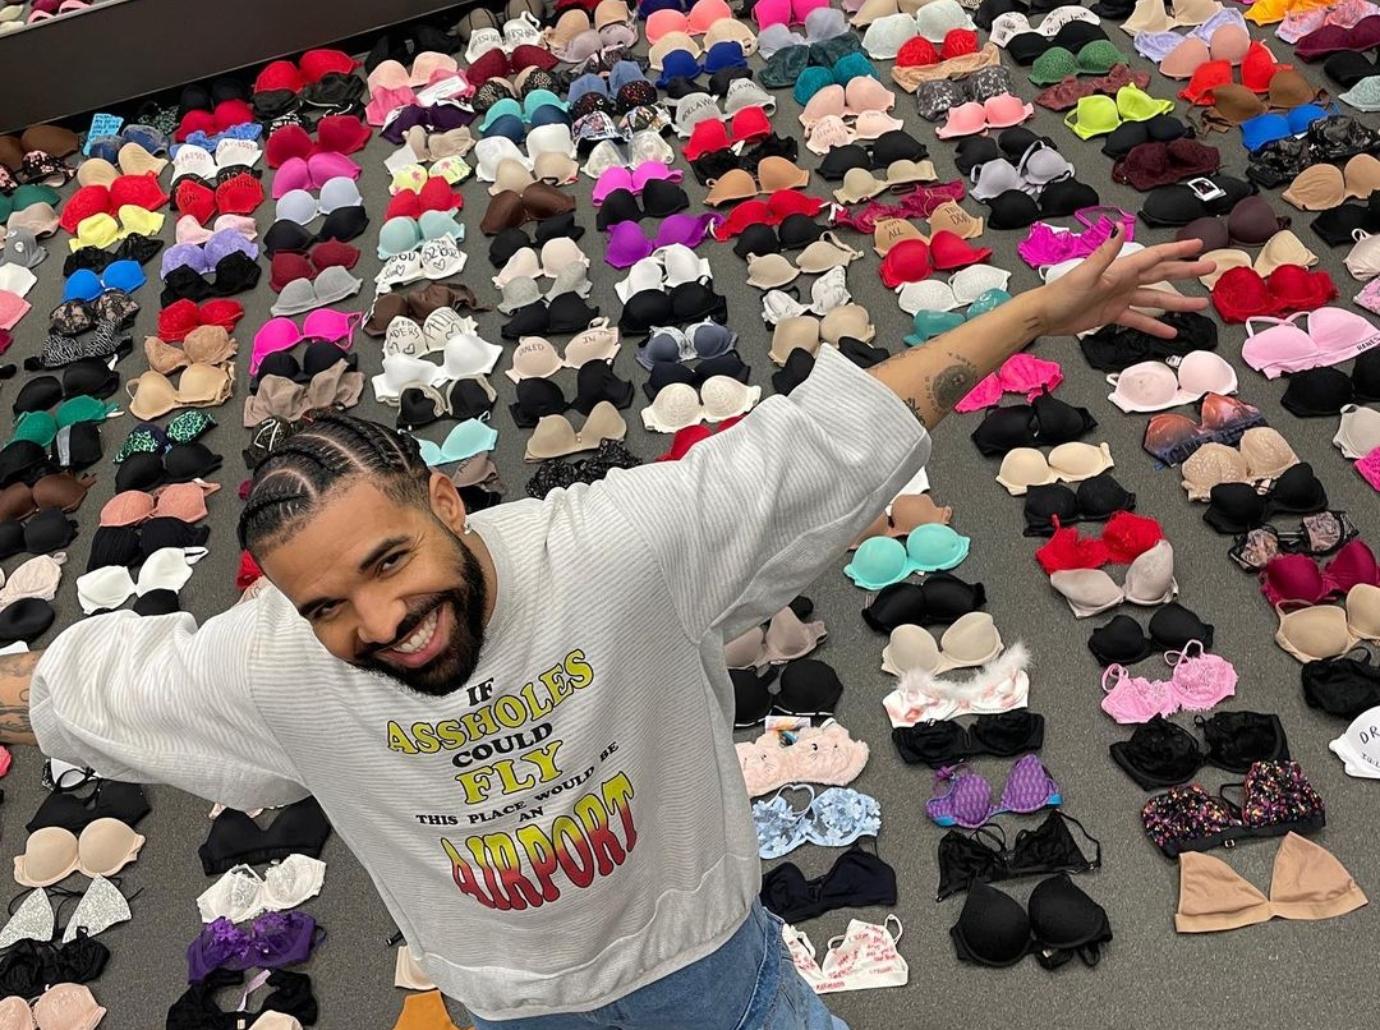 Bras galore! Drake flaunts the huge lingerie collection his fans